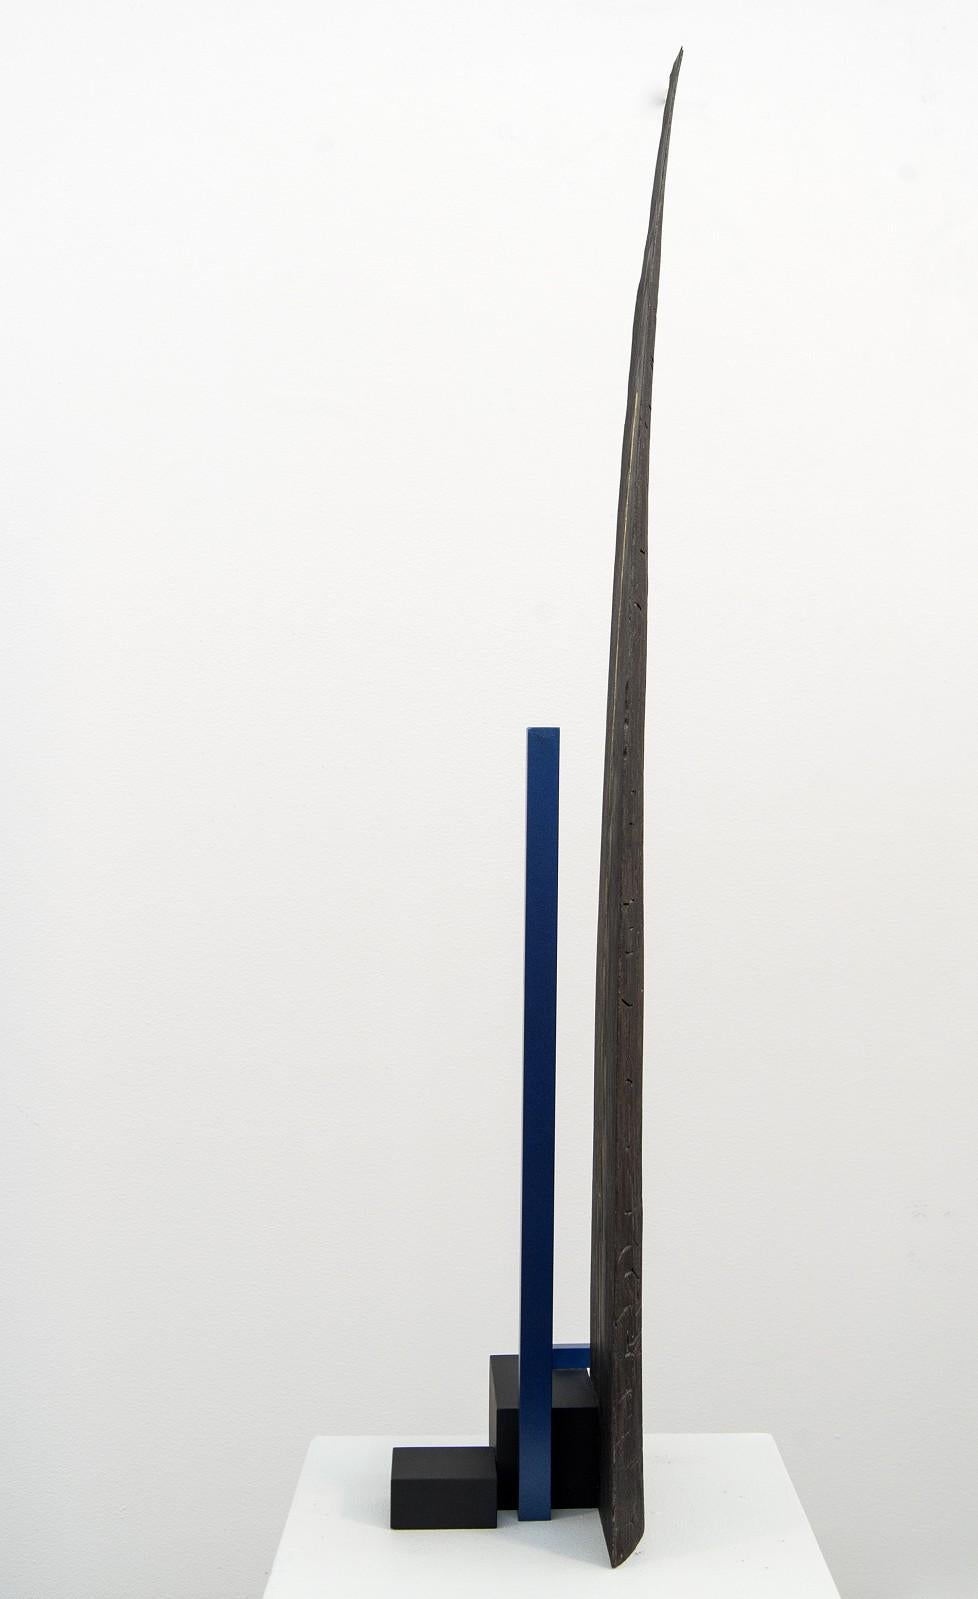 Abide - dark, dynamic, modern, contemporary, abstract, wooden sculpture - Contemporary Sculpture by Edward Falkenberg